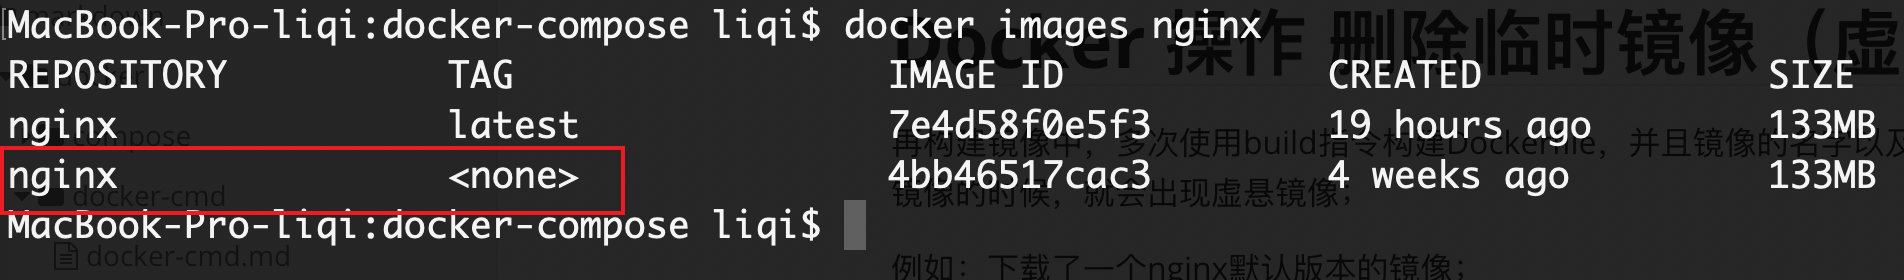 Docker 操作 删除临时镜像（虚悬镜像）